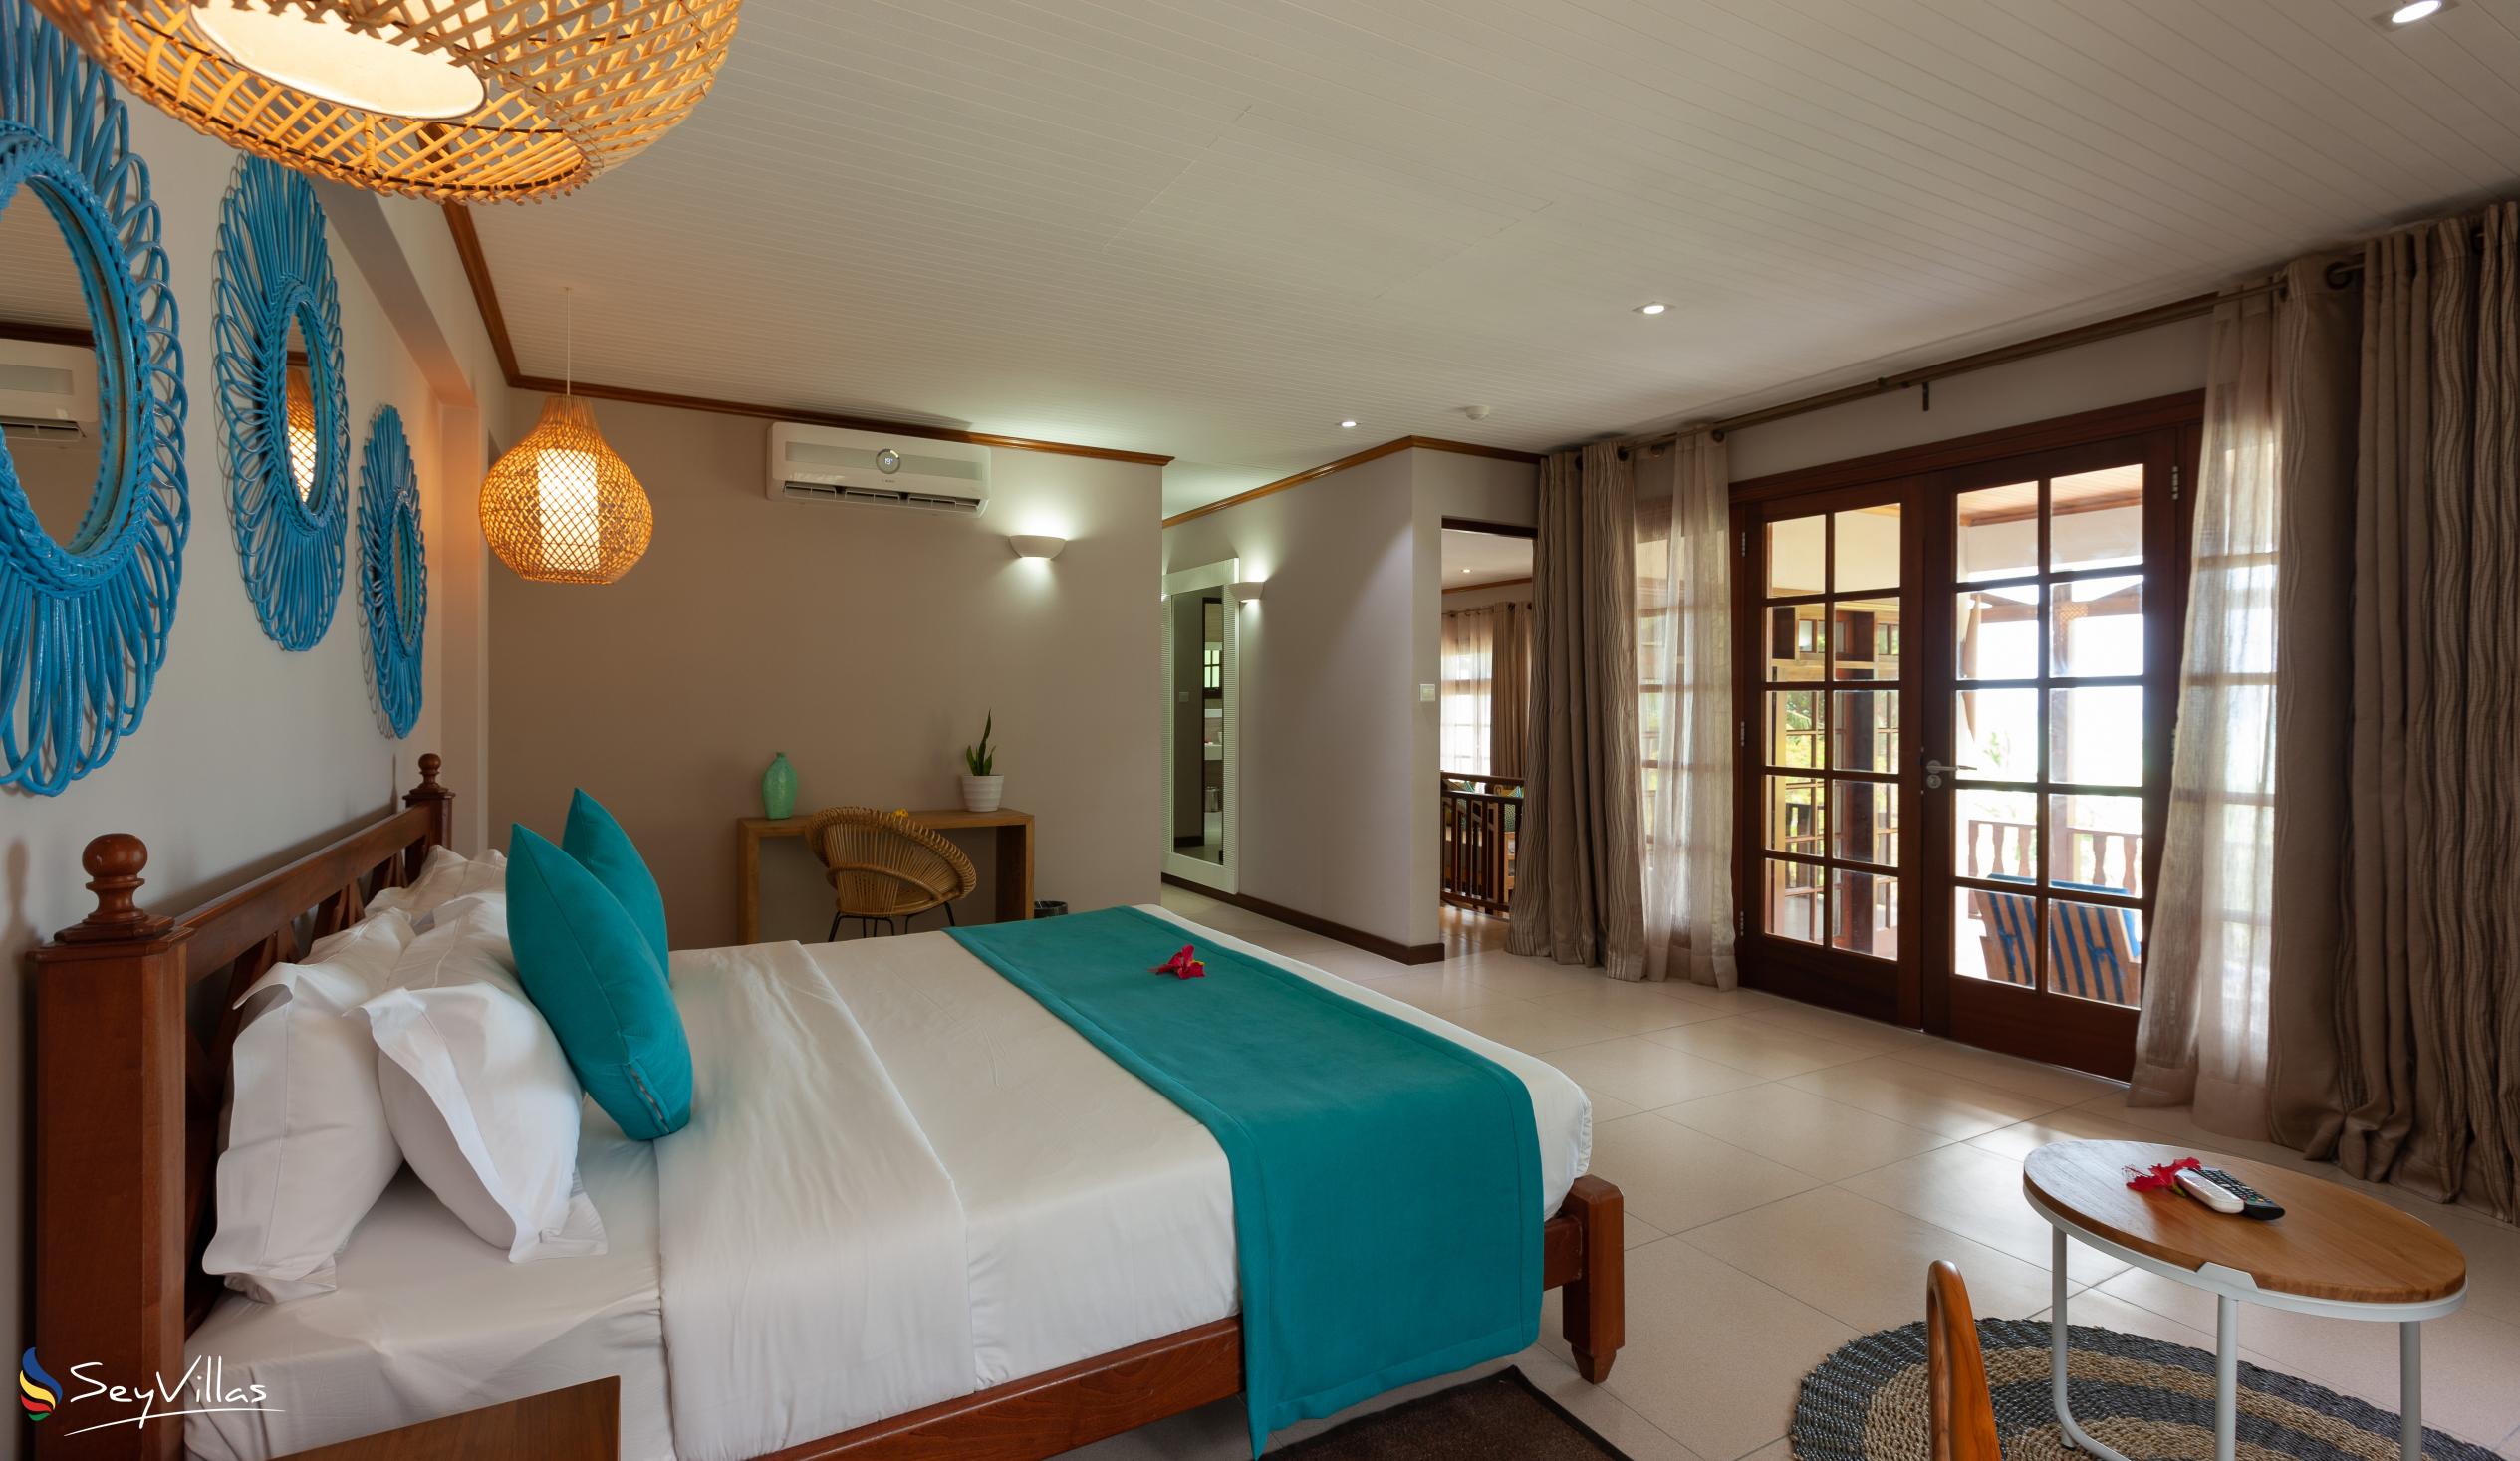 Photo 100: Hotel L'Archipel - Family Suite - Praslin (Seychelles)